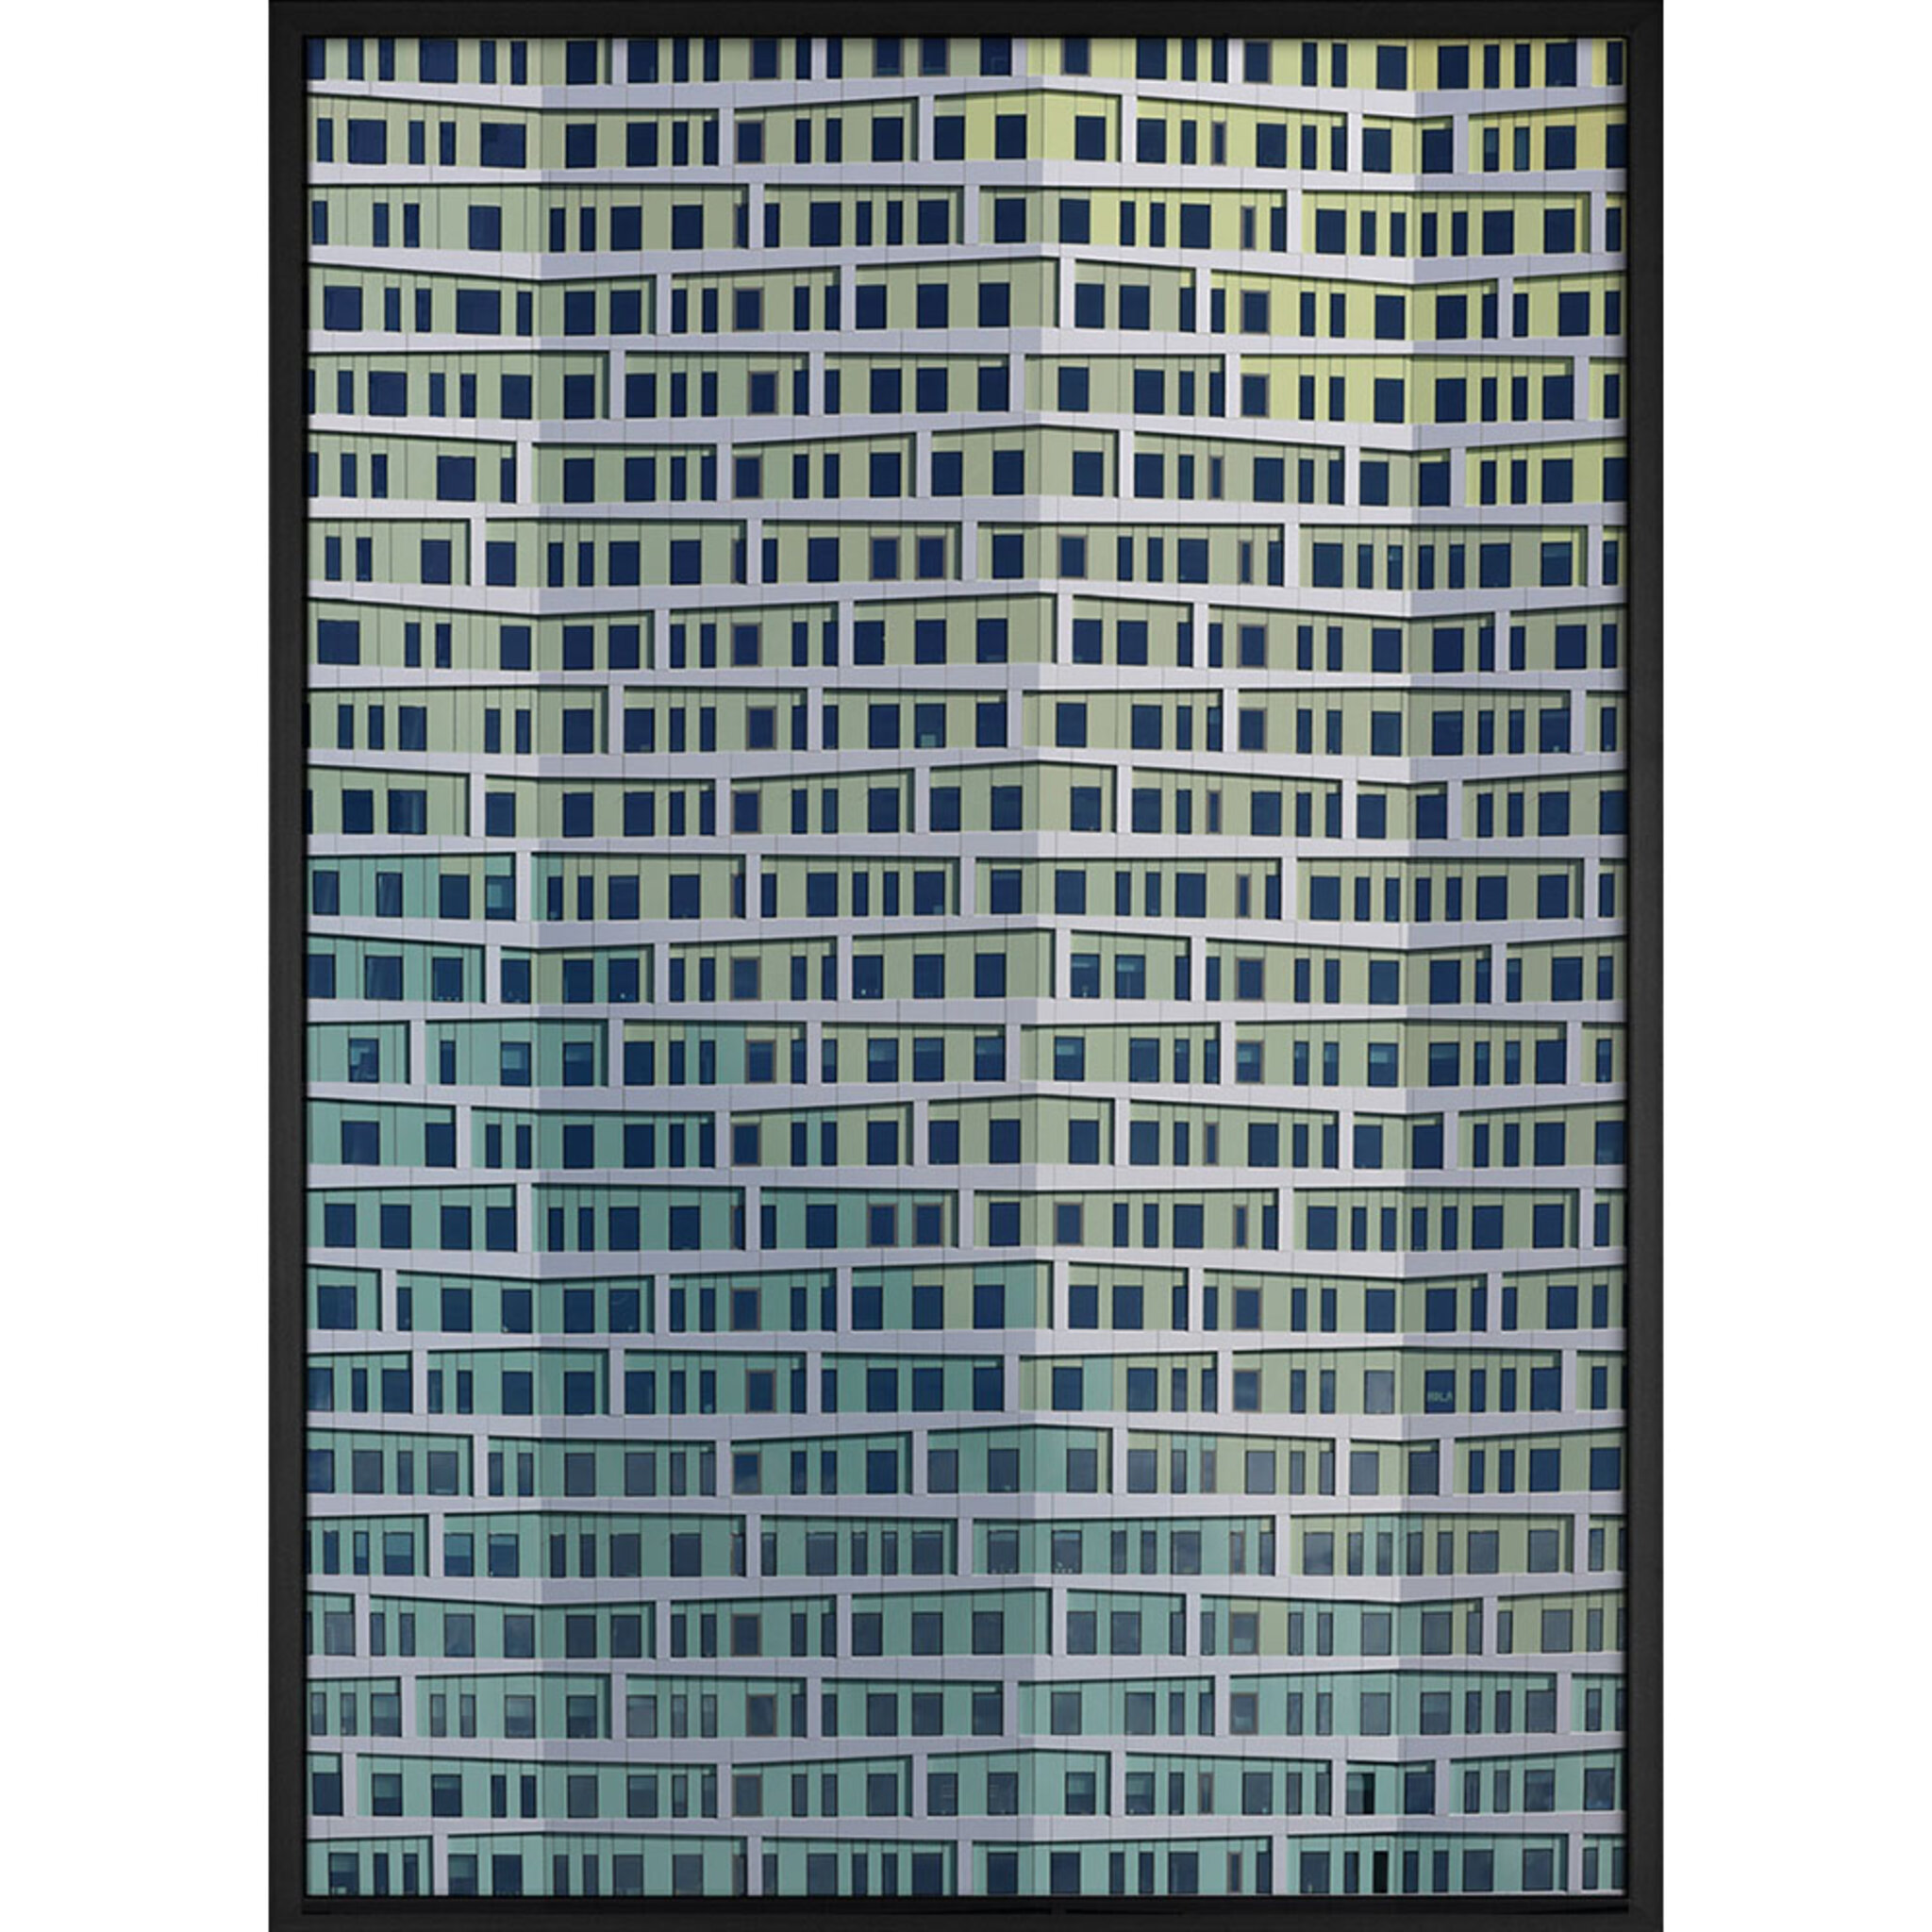 Poster Minimalistiskt Hus, 21x30 cm